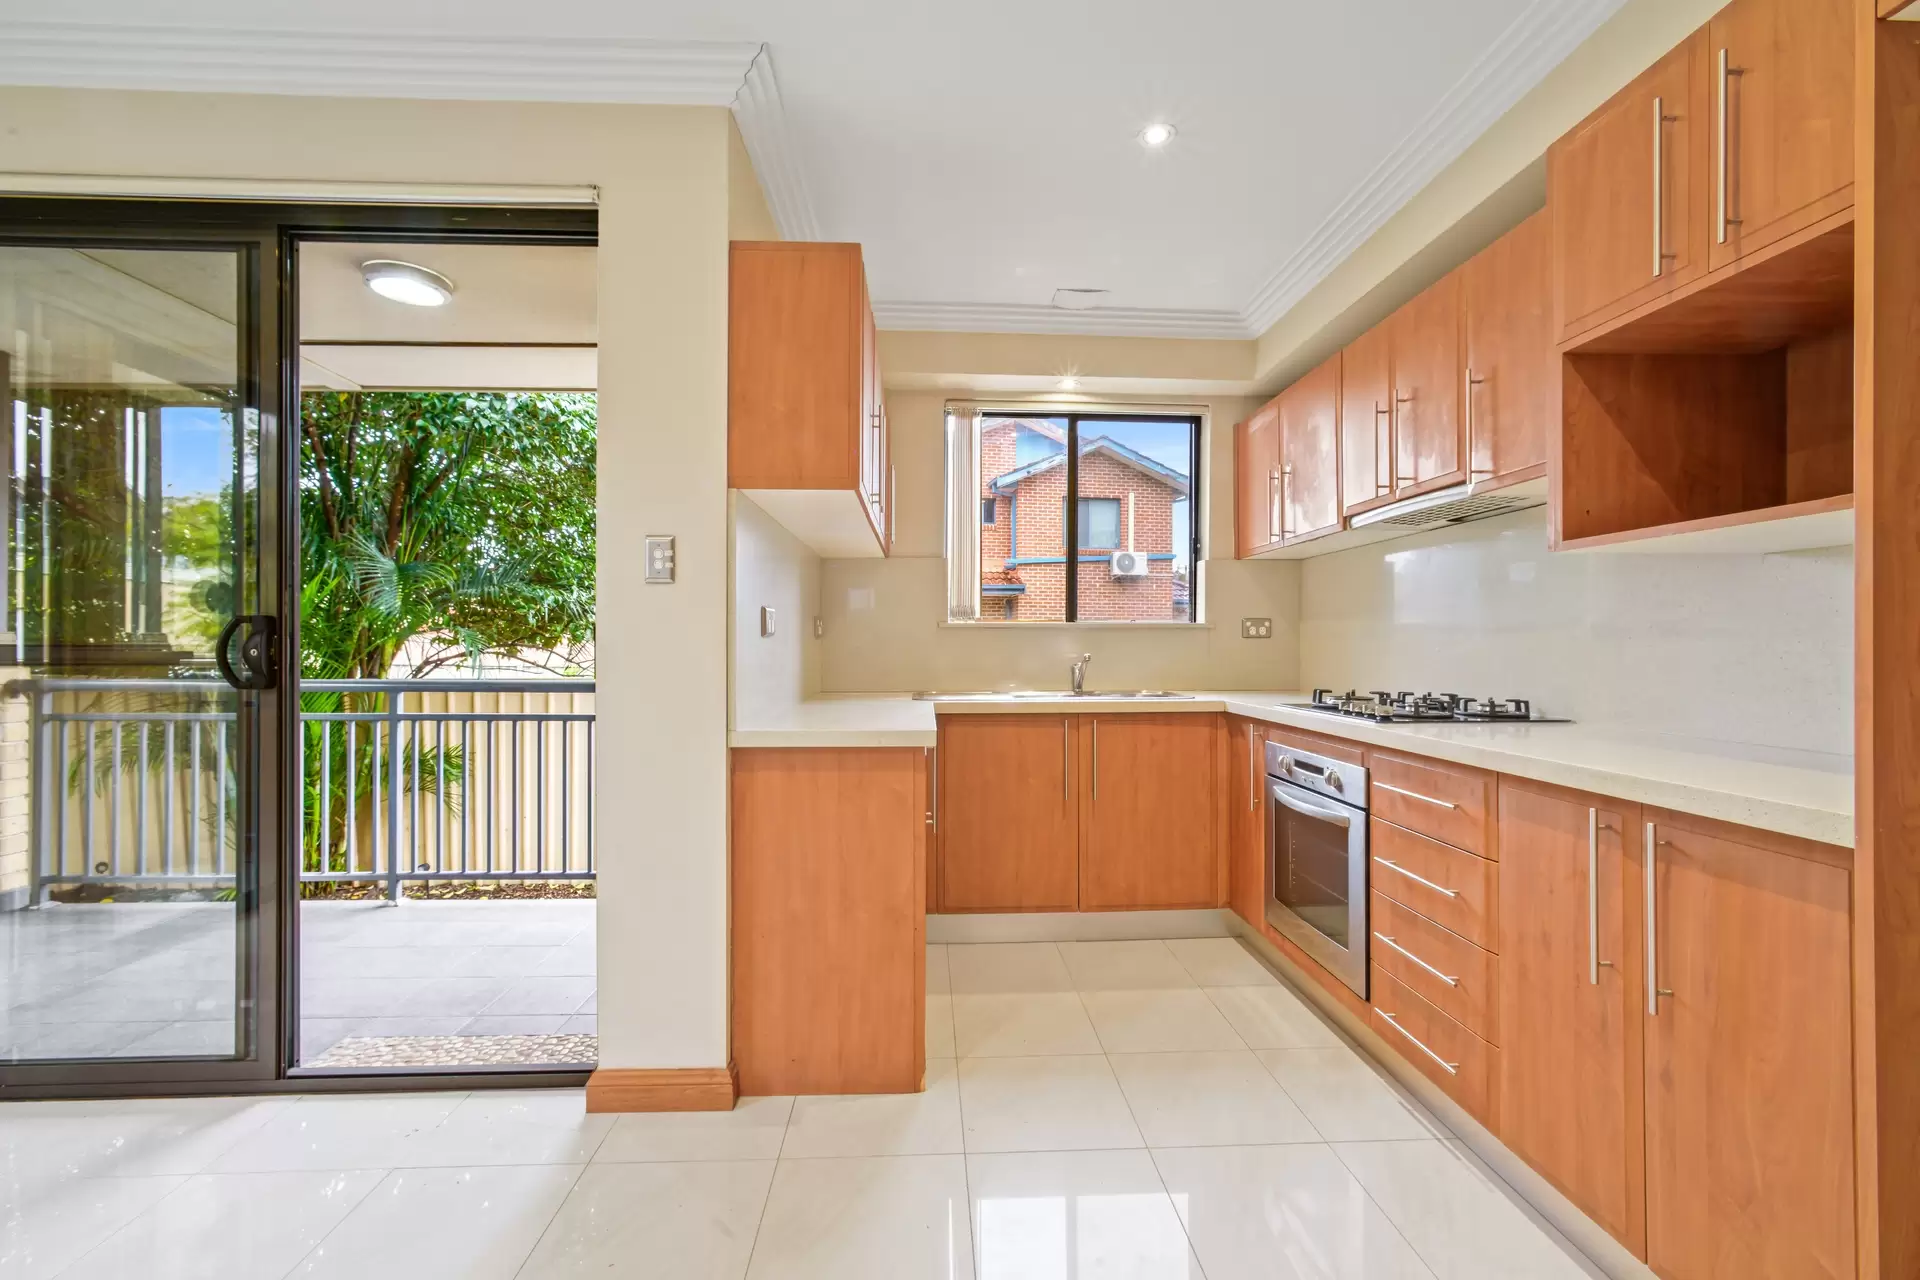 7/50-52 Hassall Street, Parramatta For Lease by Richard Matthews Real Estate - image 2